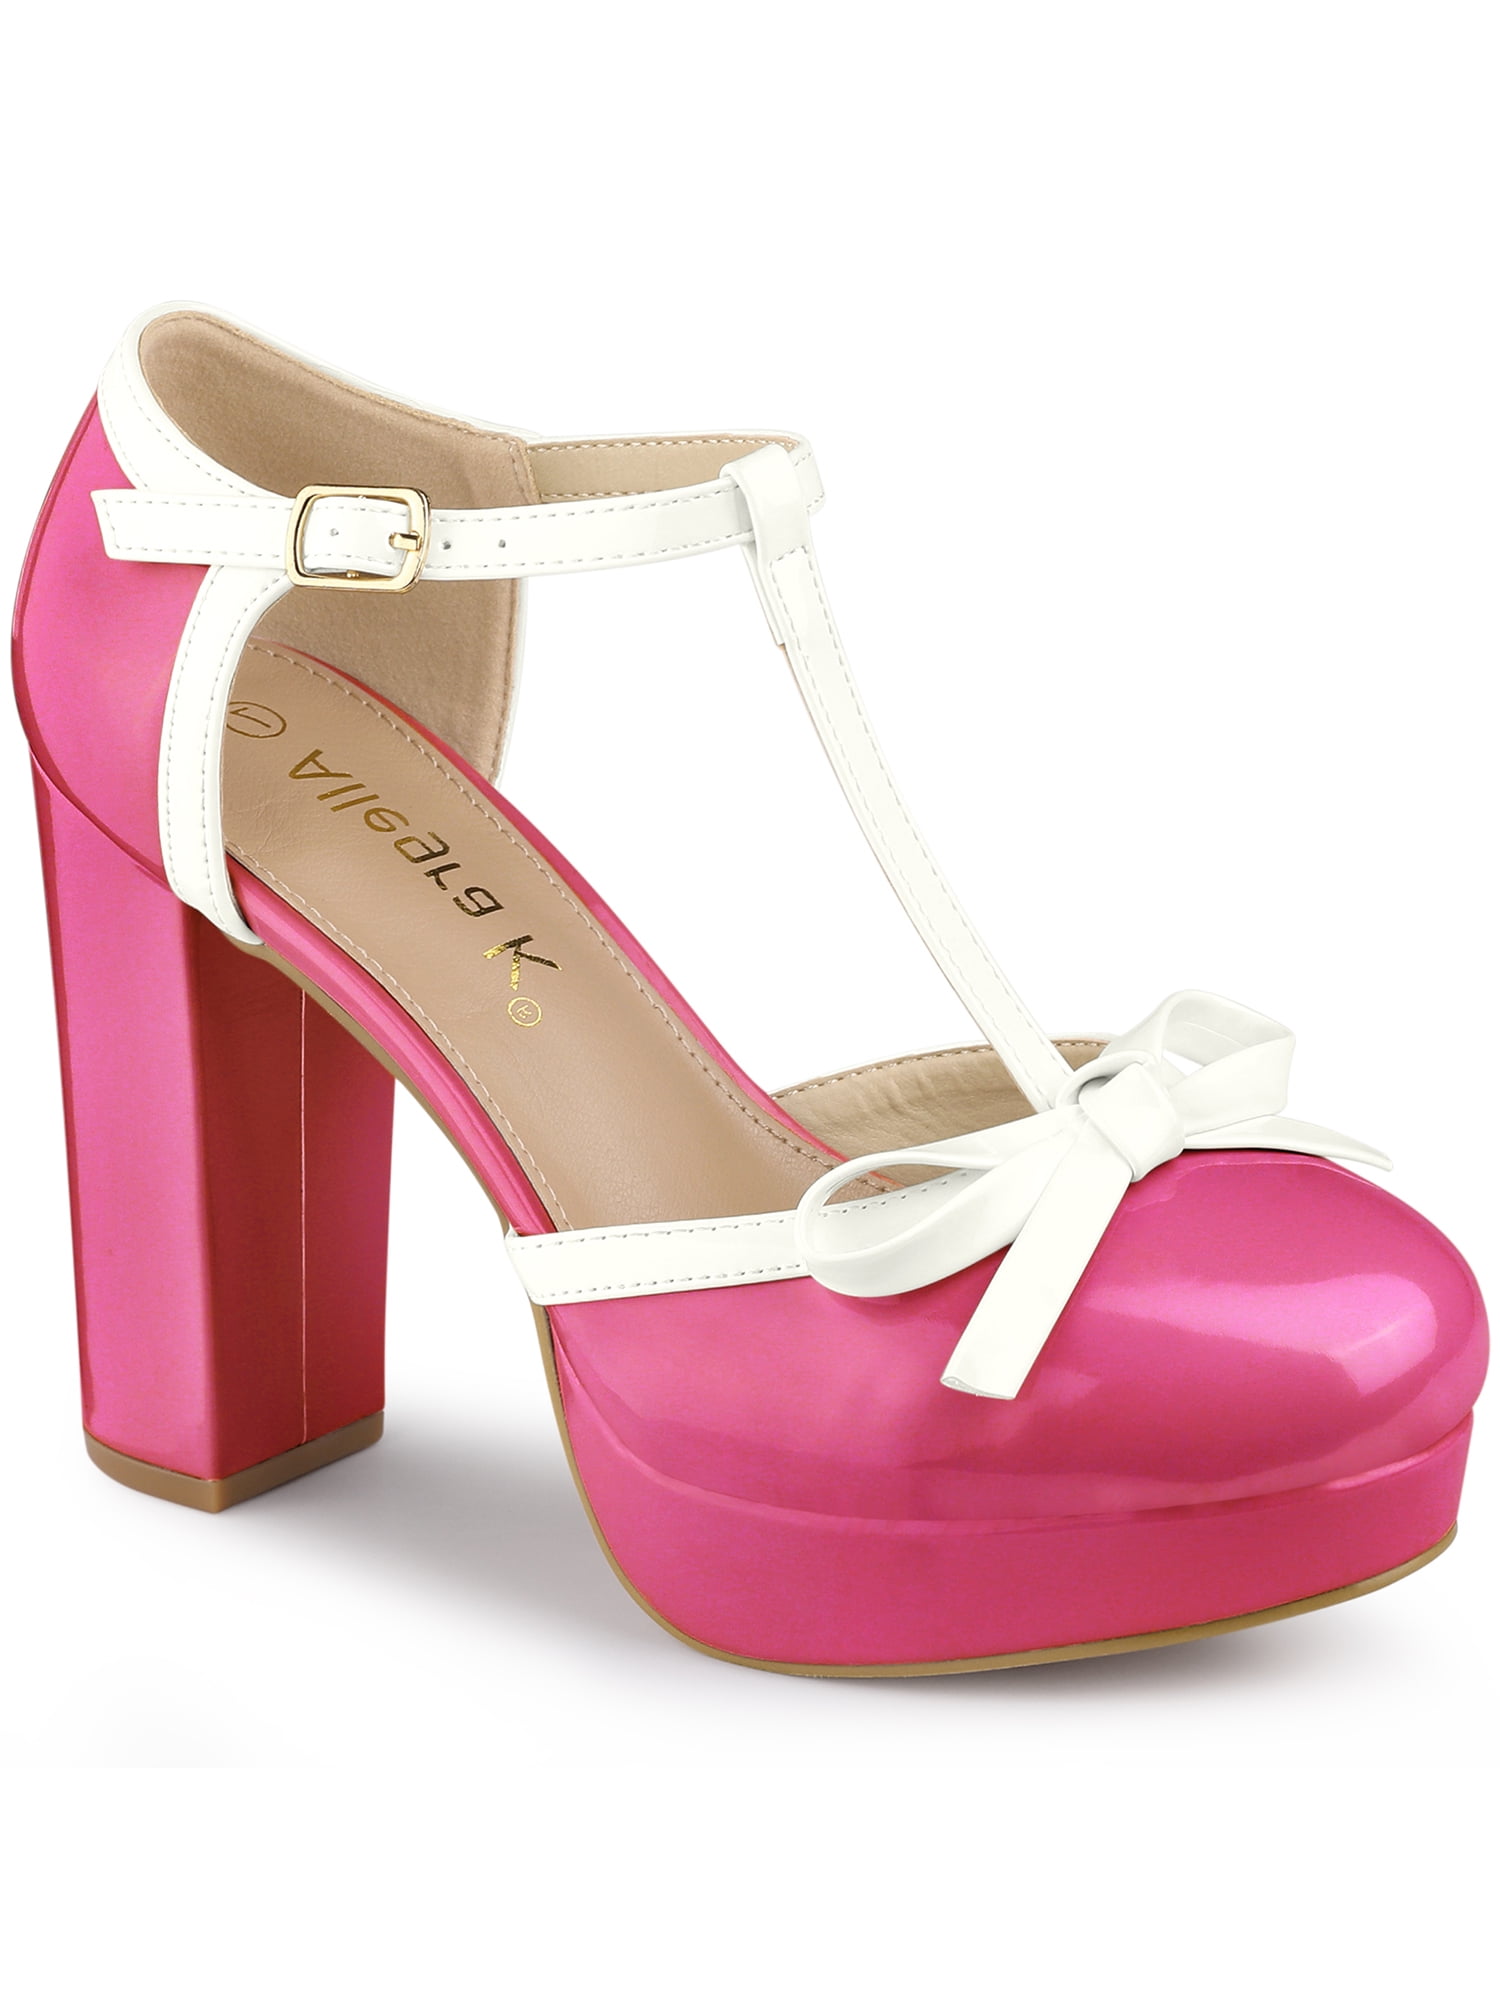 Lib Peep Toe Platforms Ankle Belt Buckle T Straps Chunky Heels Sandals -  Pink in Sexy Heels & Platforms - $75.85